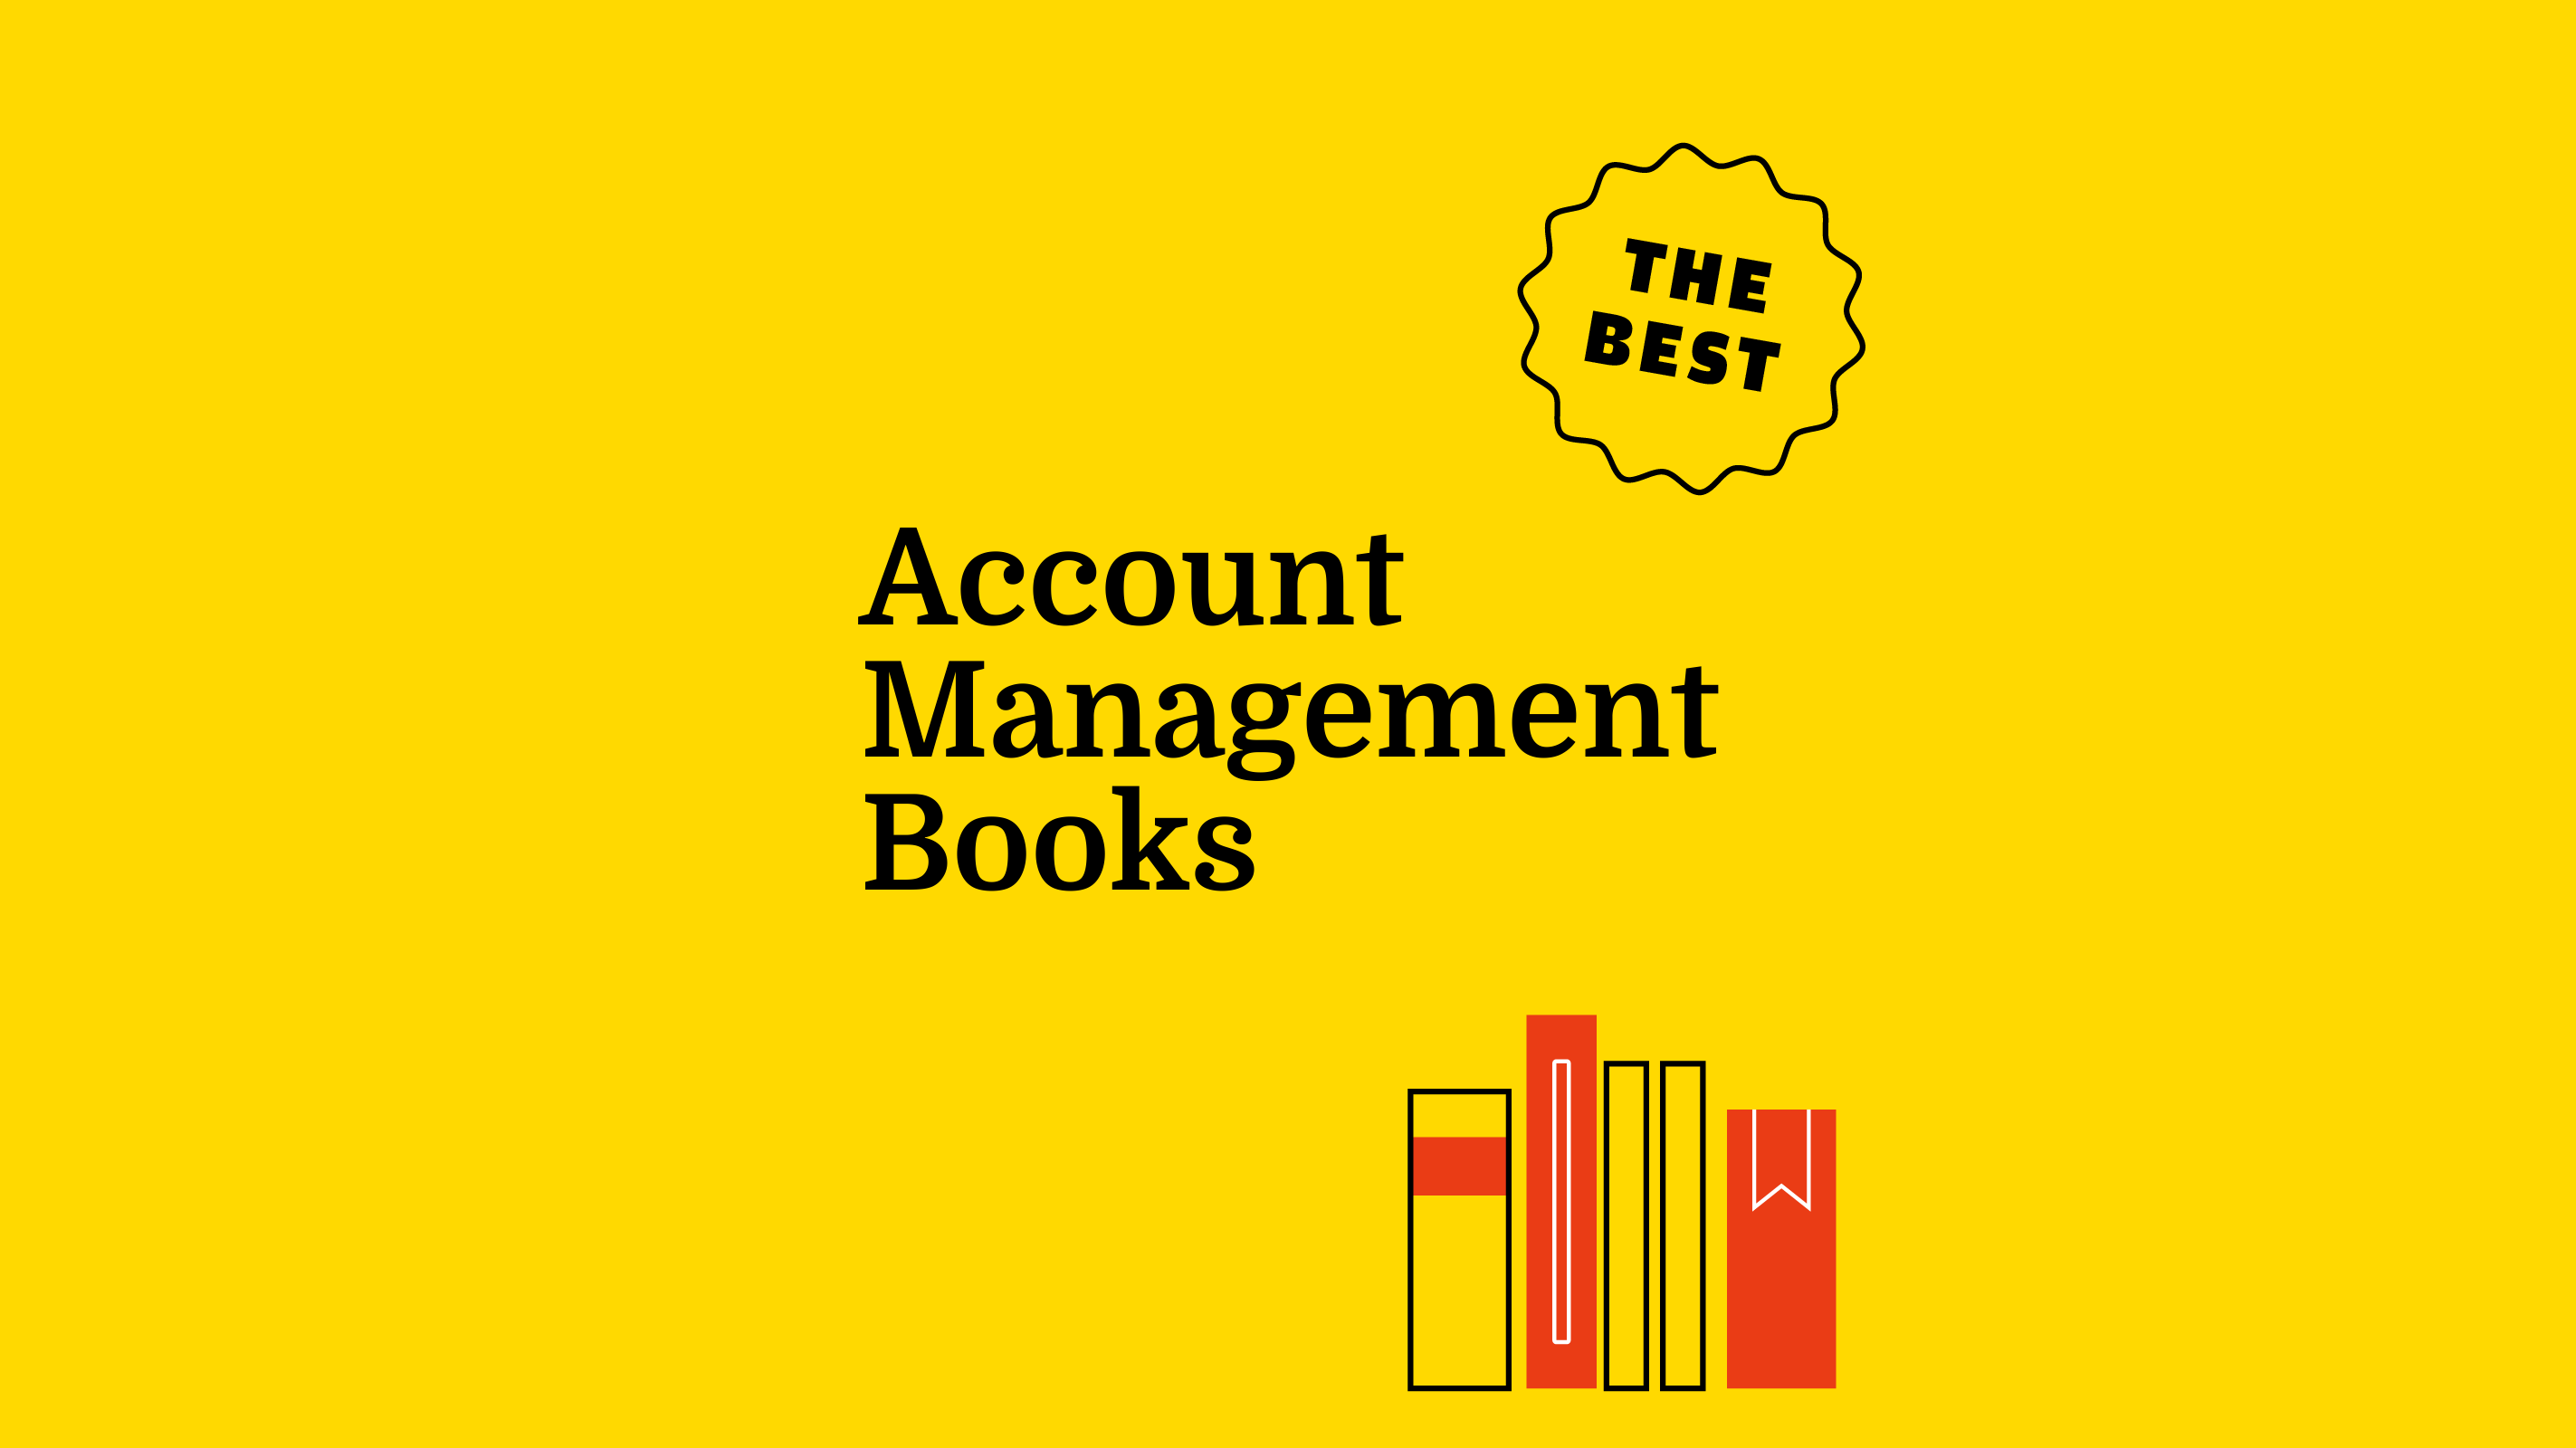 Account management books best books